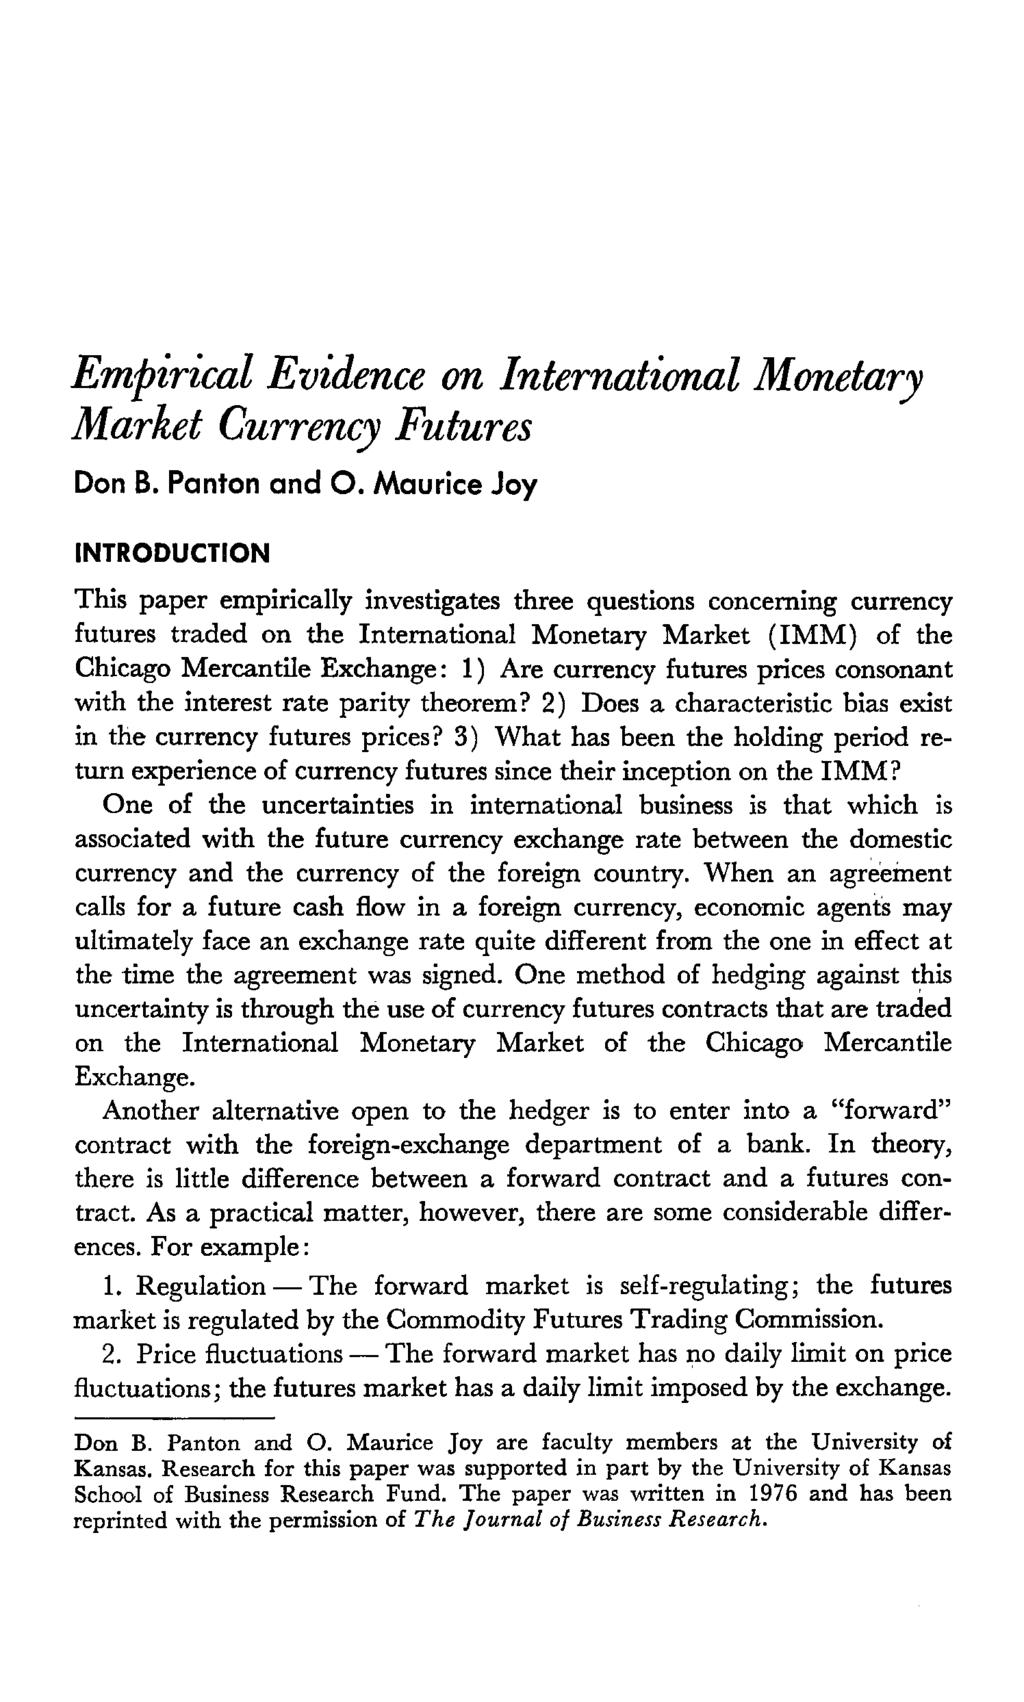 Empirical Evidence on International Monetary Market Currency Futures Don B. Panton and O.